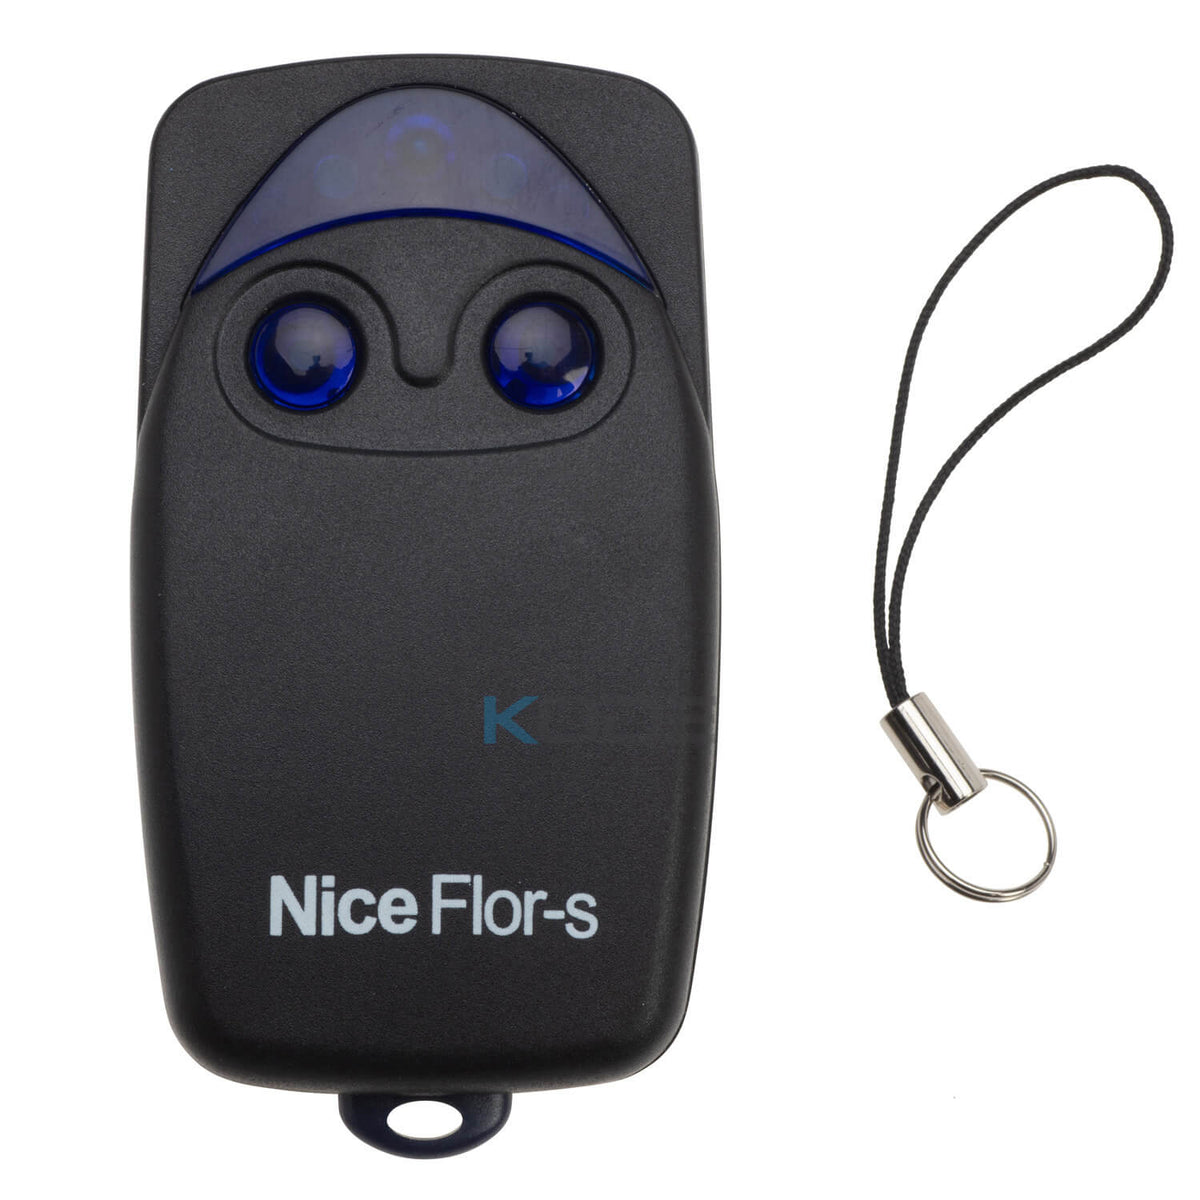 NICE Flor-s Front attachment